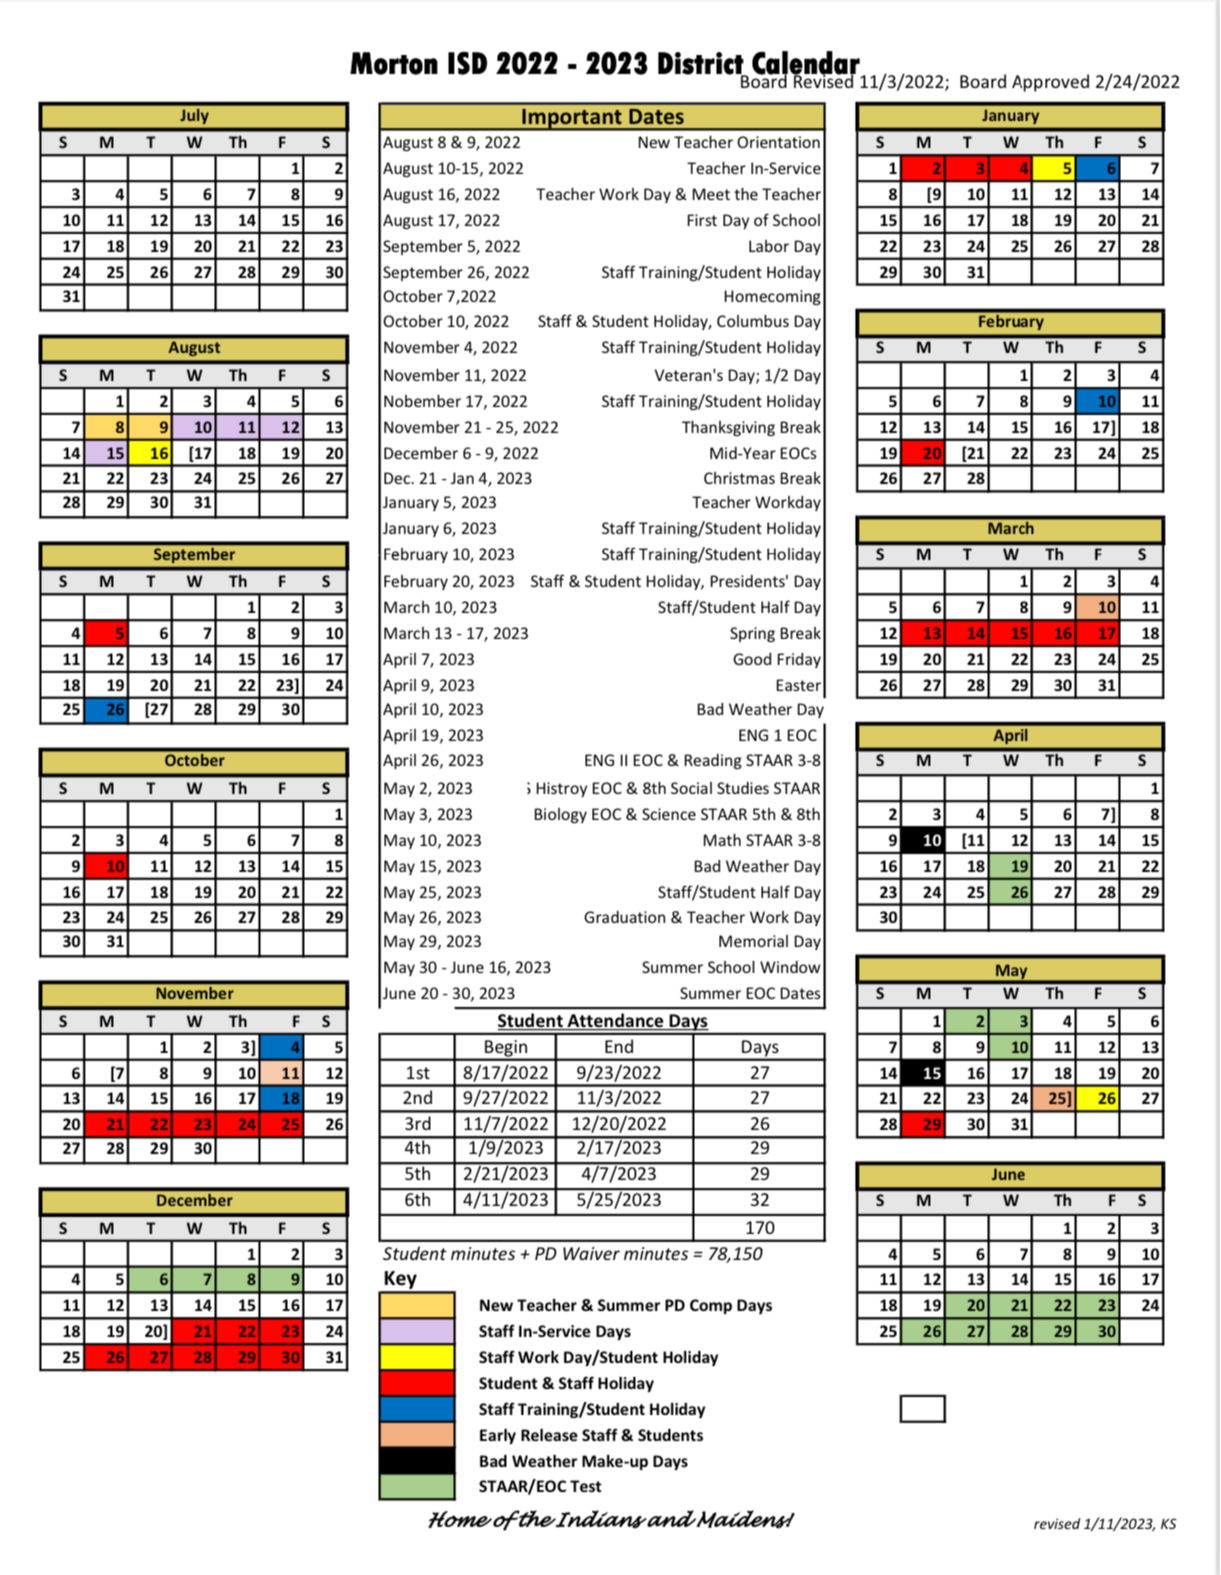 District Calendars | Morton ISD